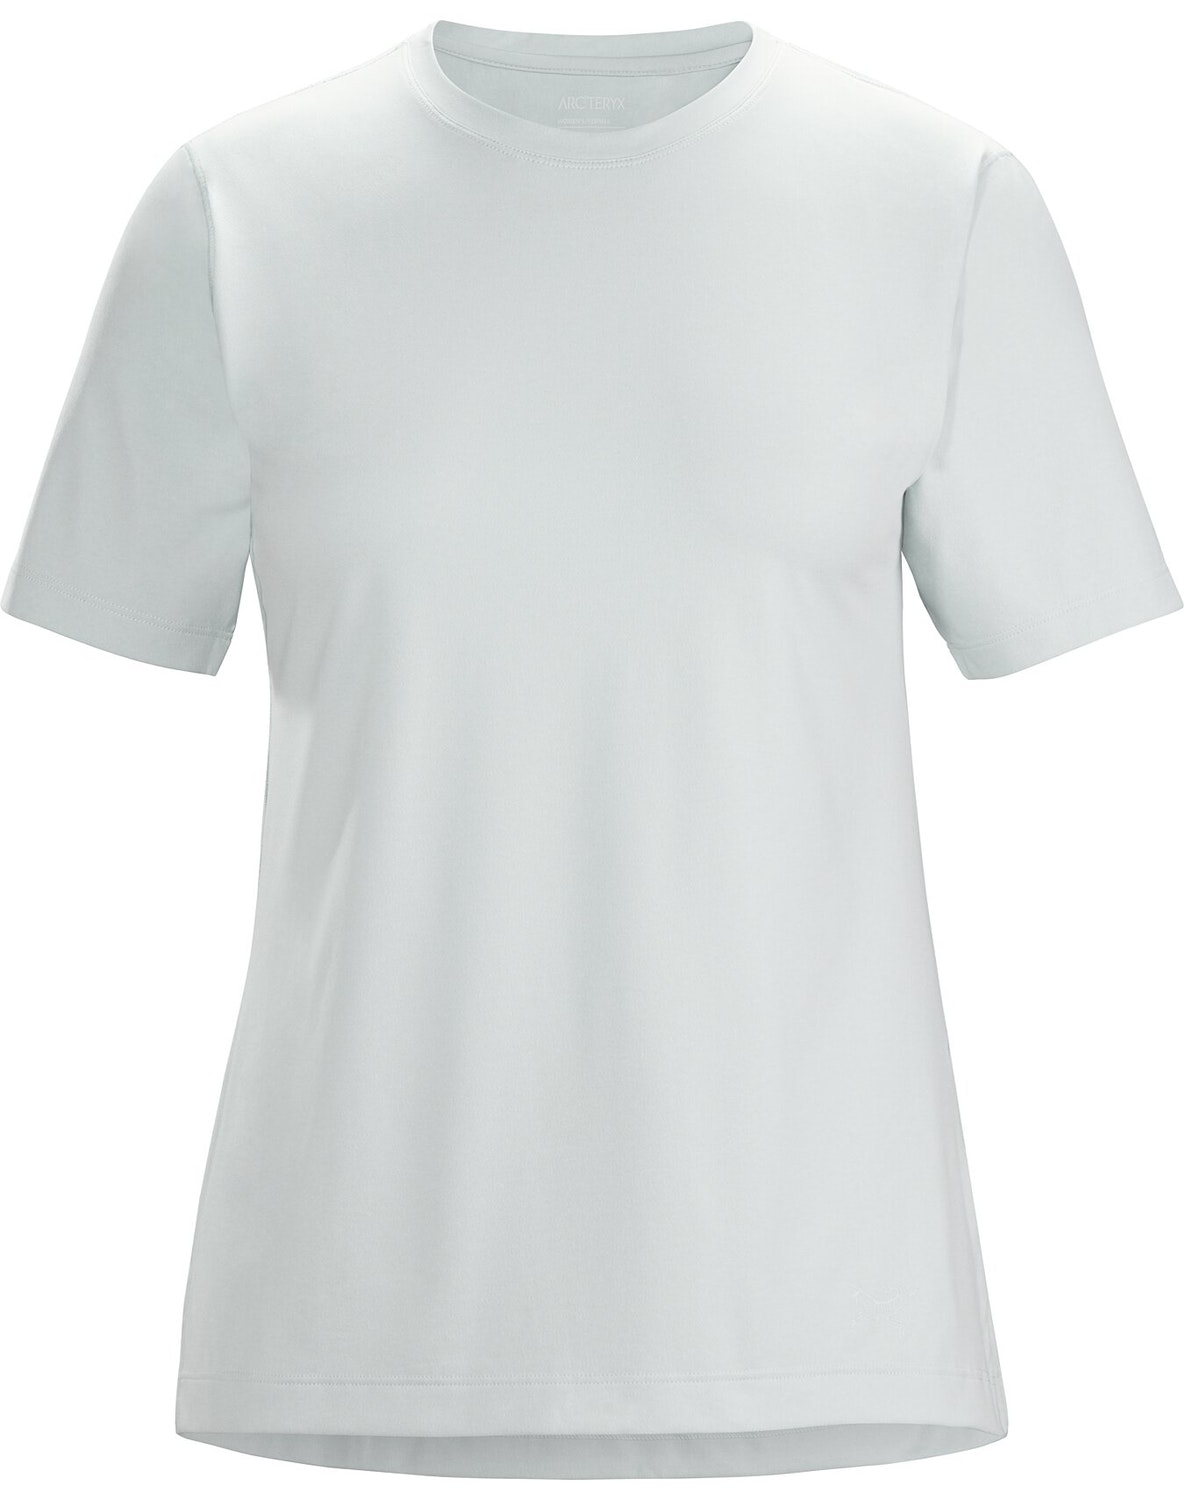 T-shirt Arc'teryx Remige Donna Beige Chiaro - IT-3116933